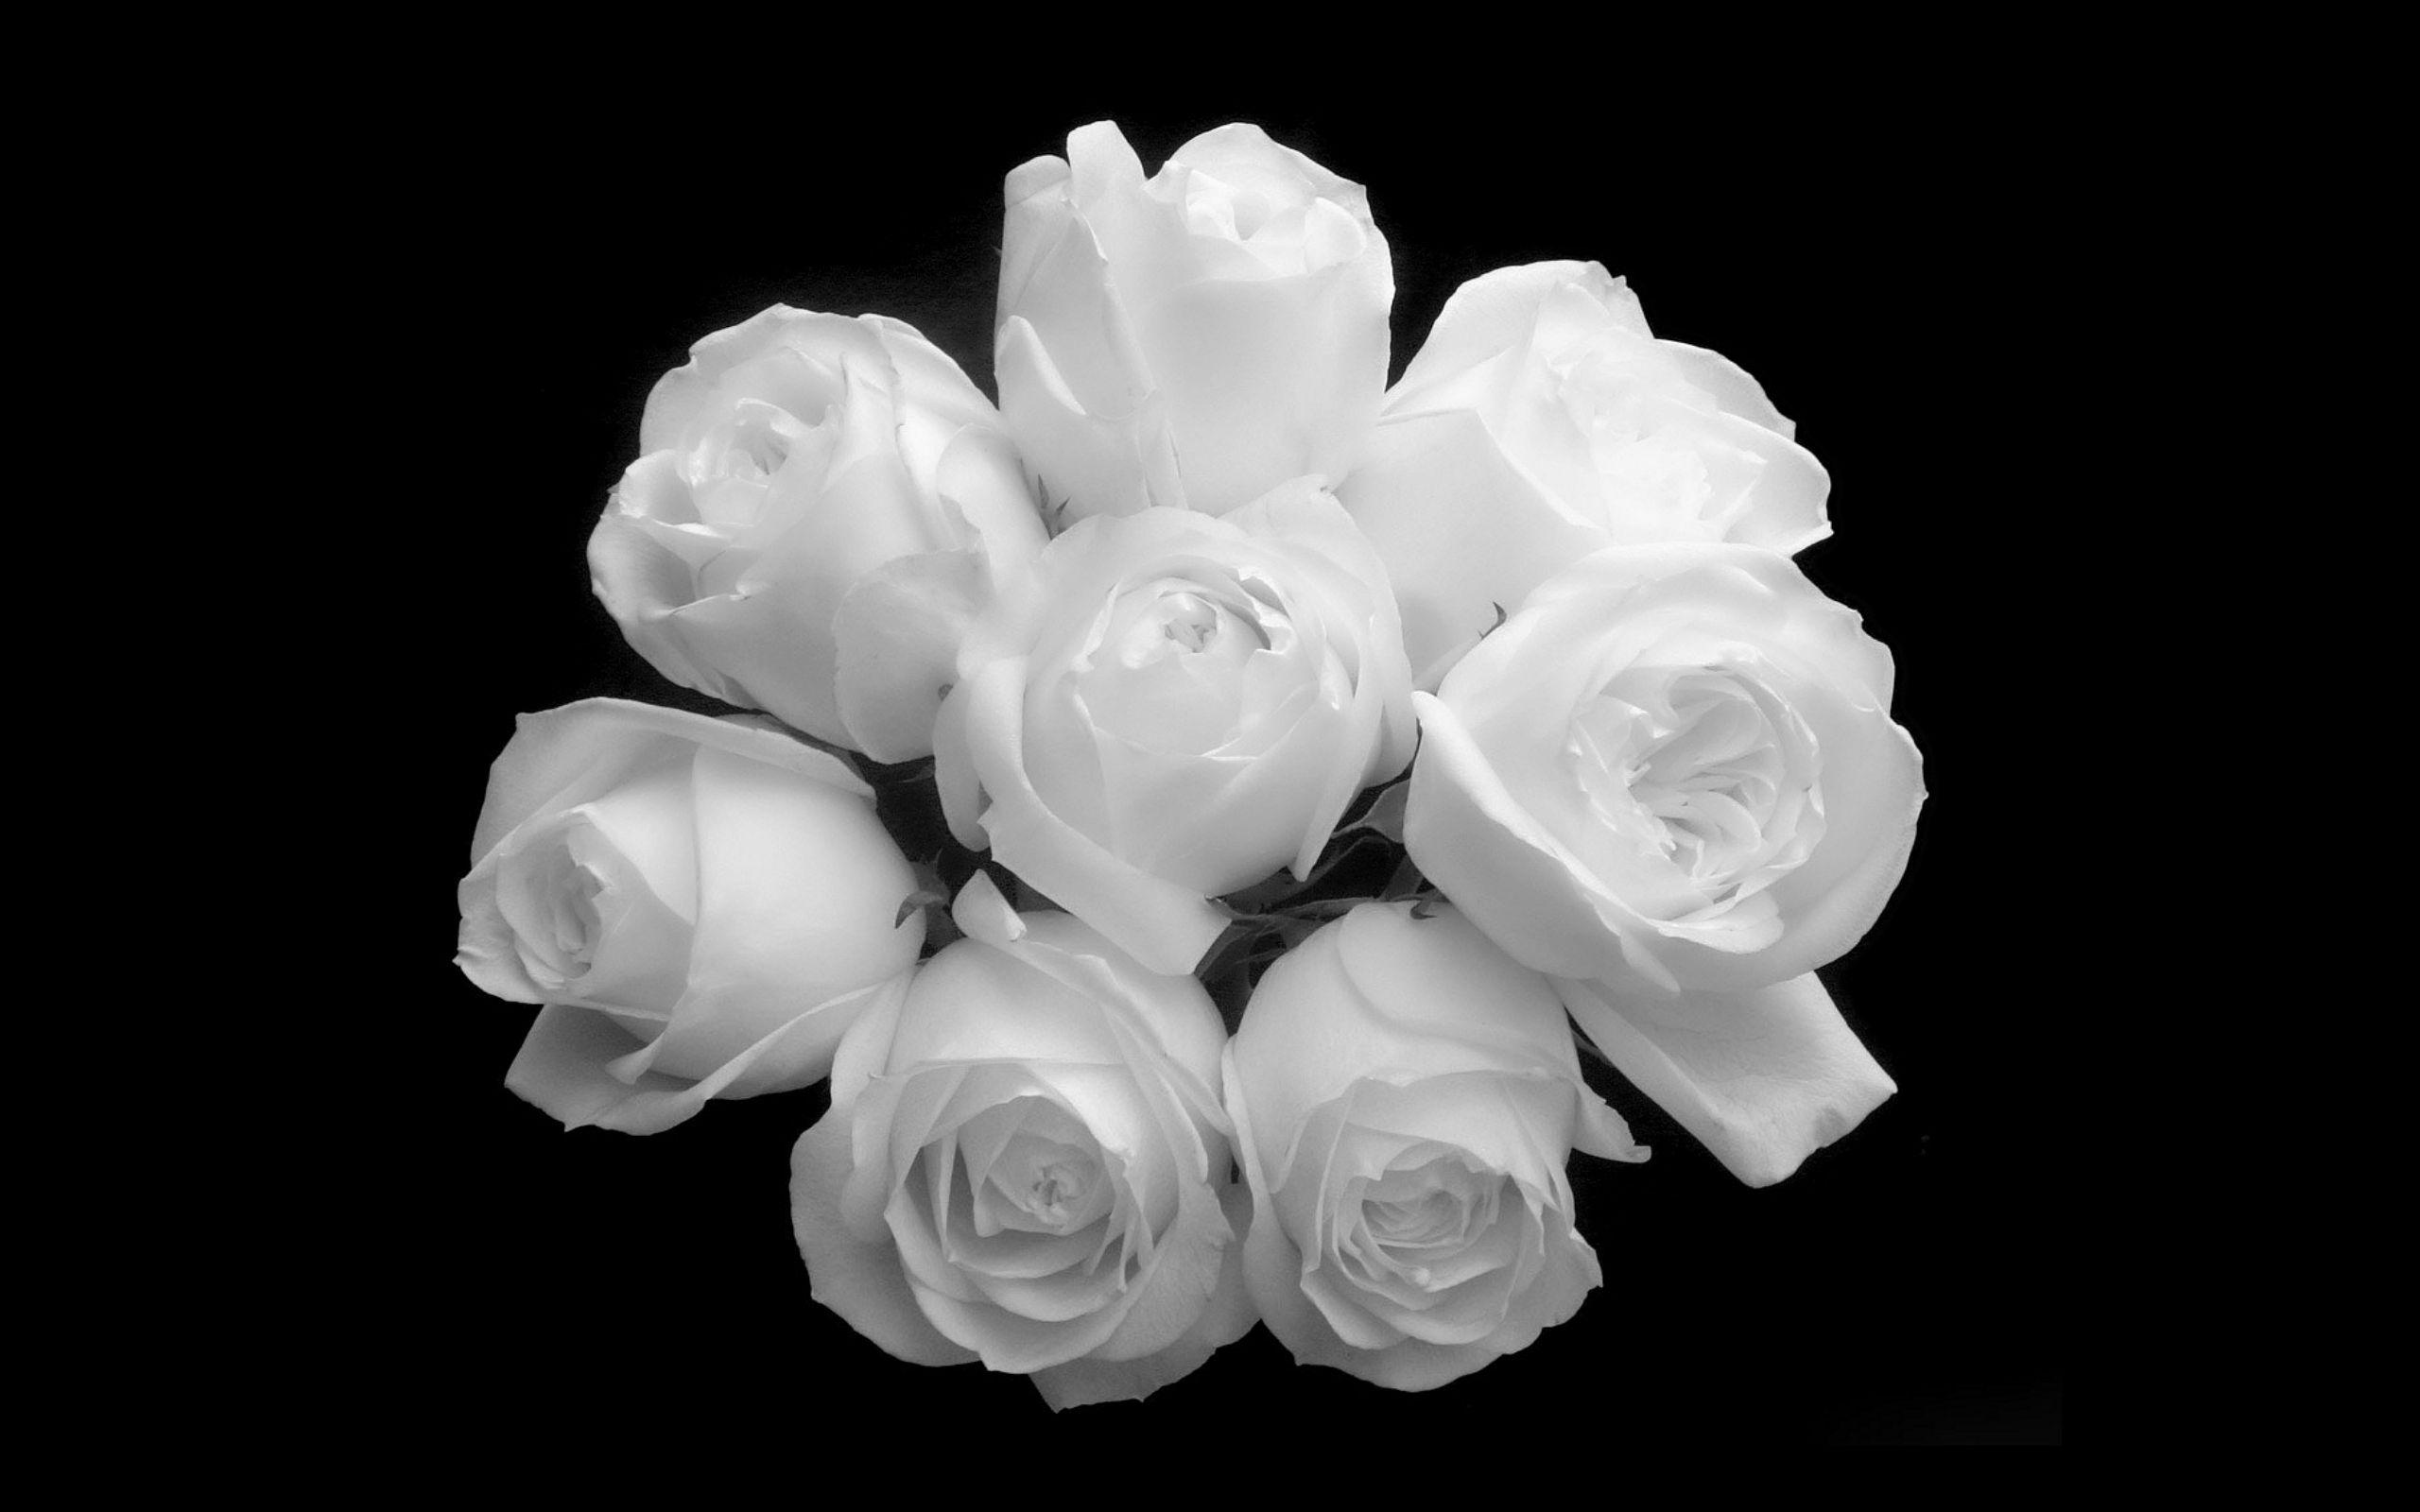 Background Of White Roses Desktop Wallpaper Rose 3D 1080 Pixel High